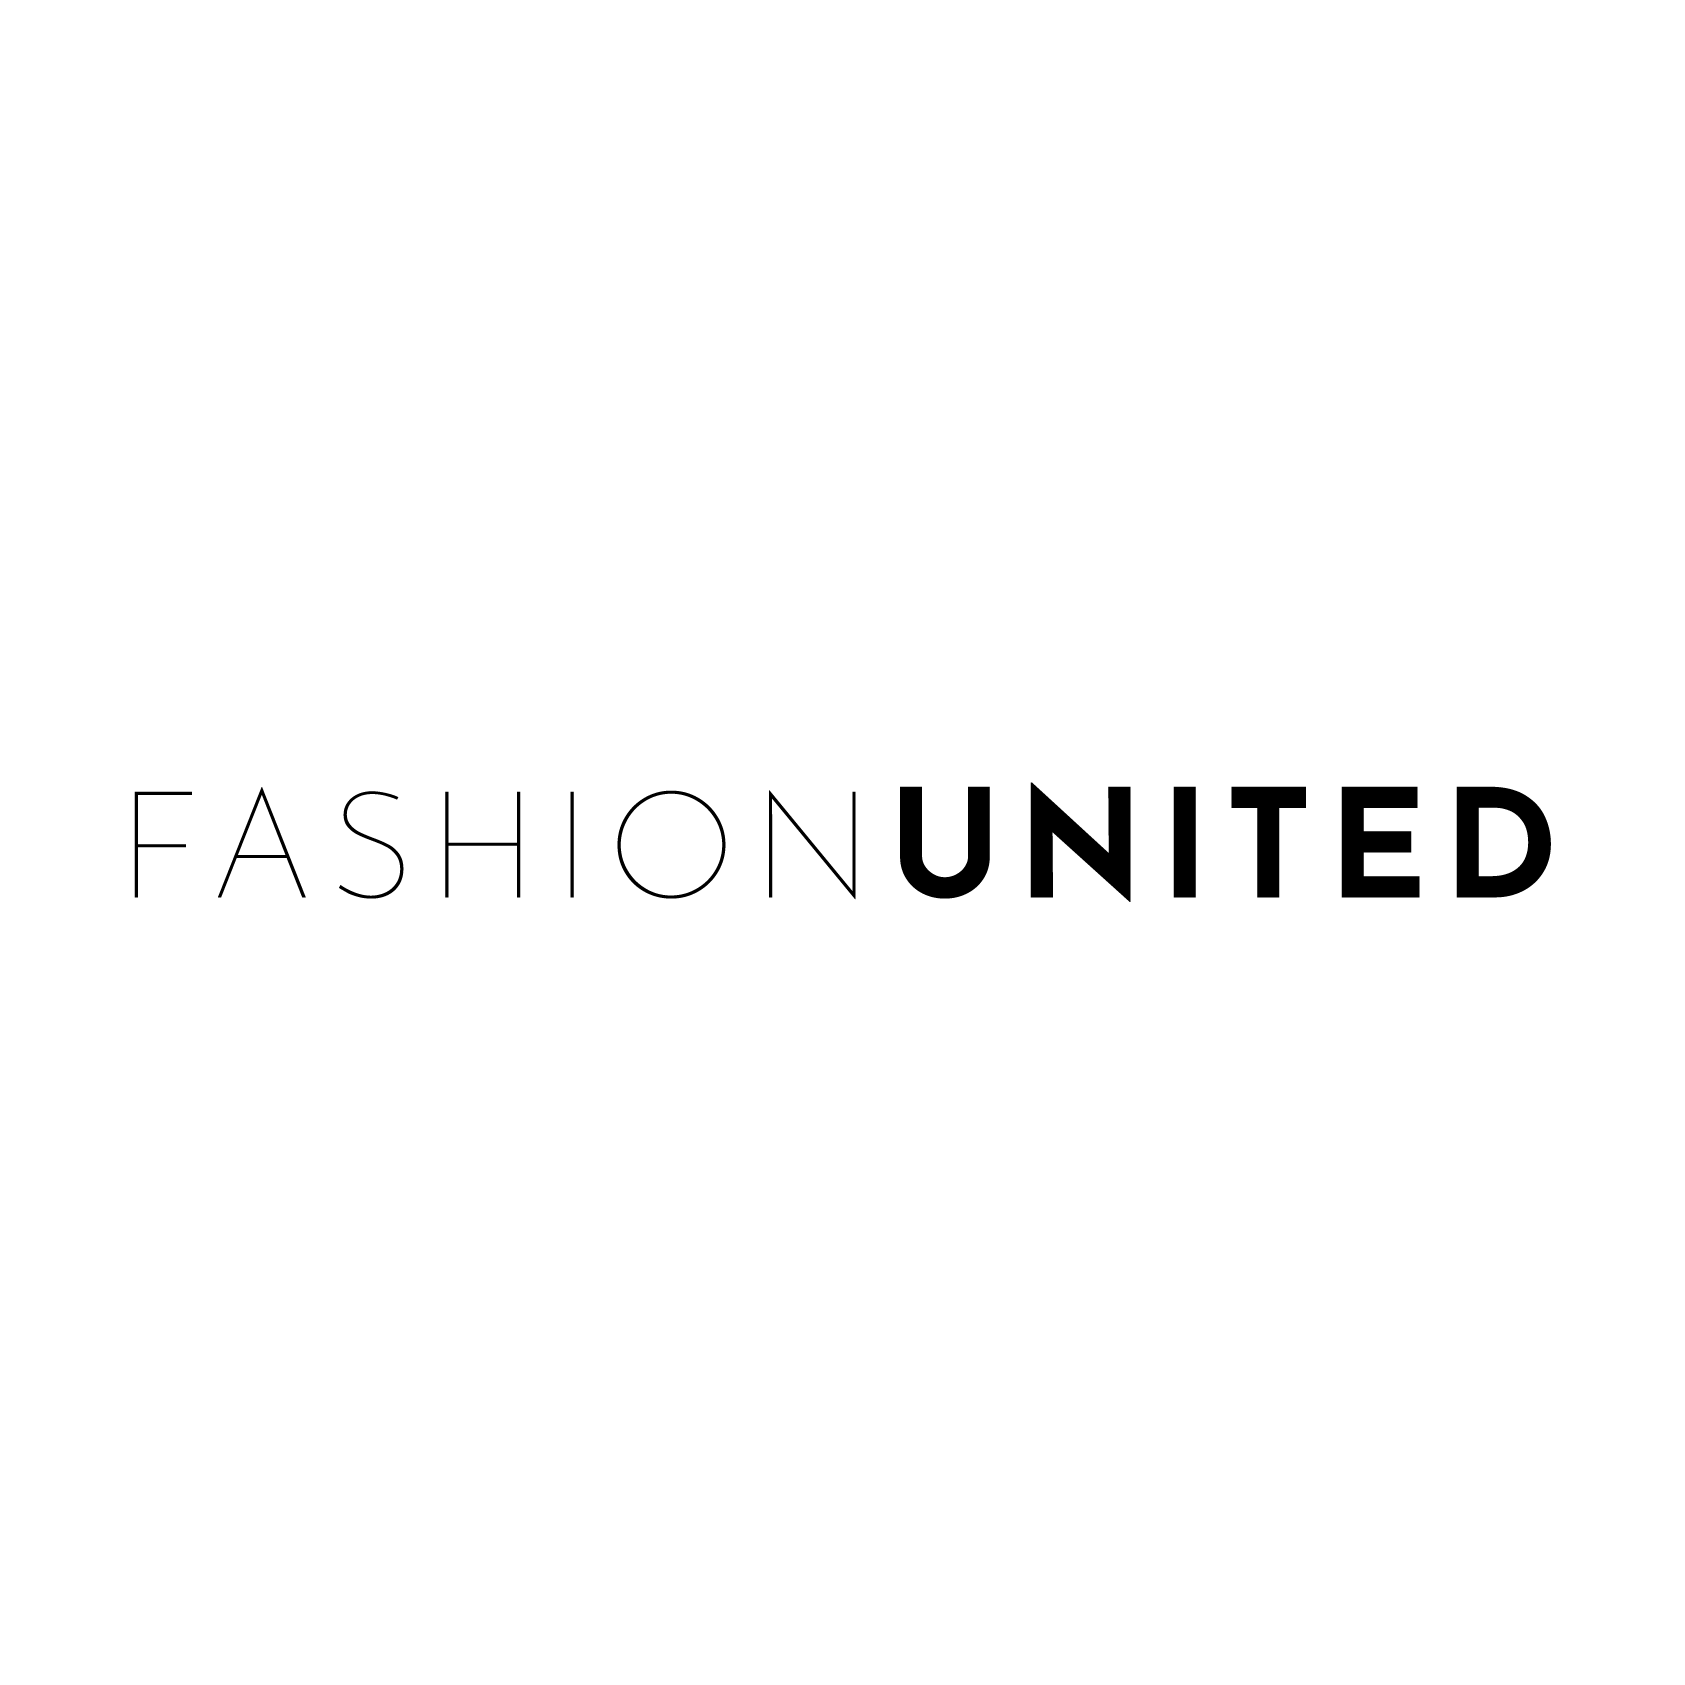 Fashionunited logo black-01.png